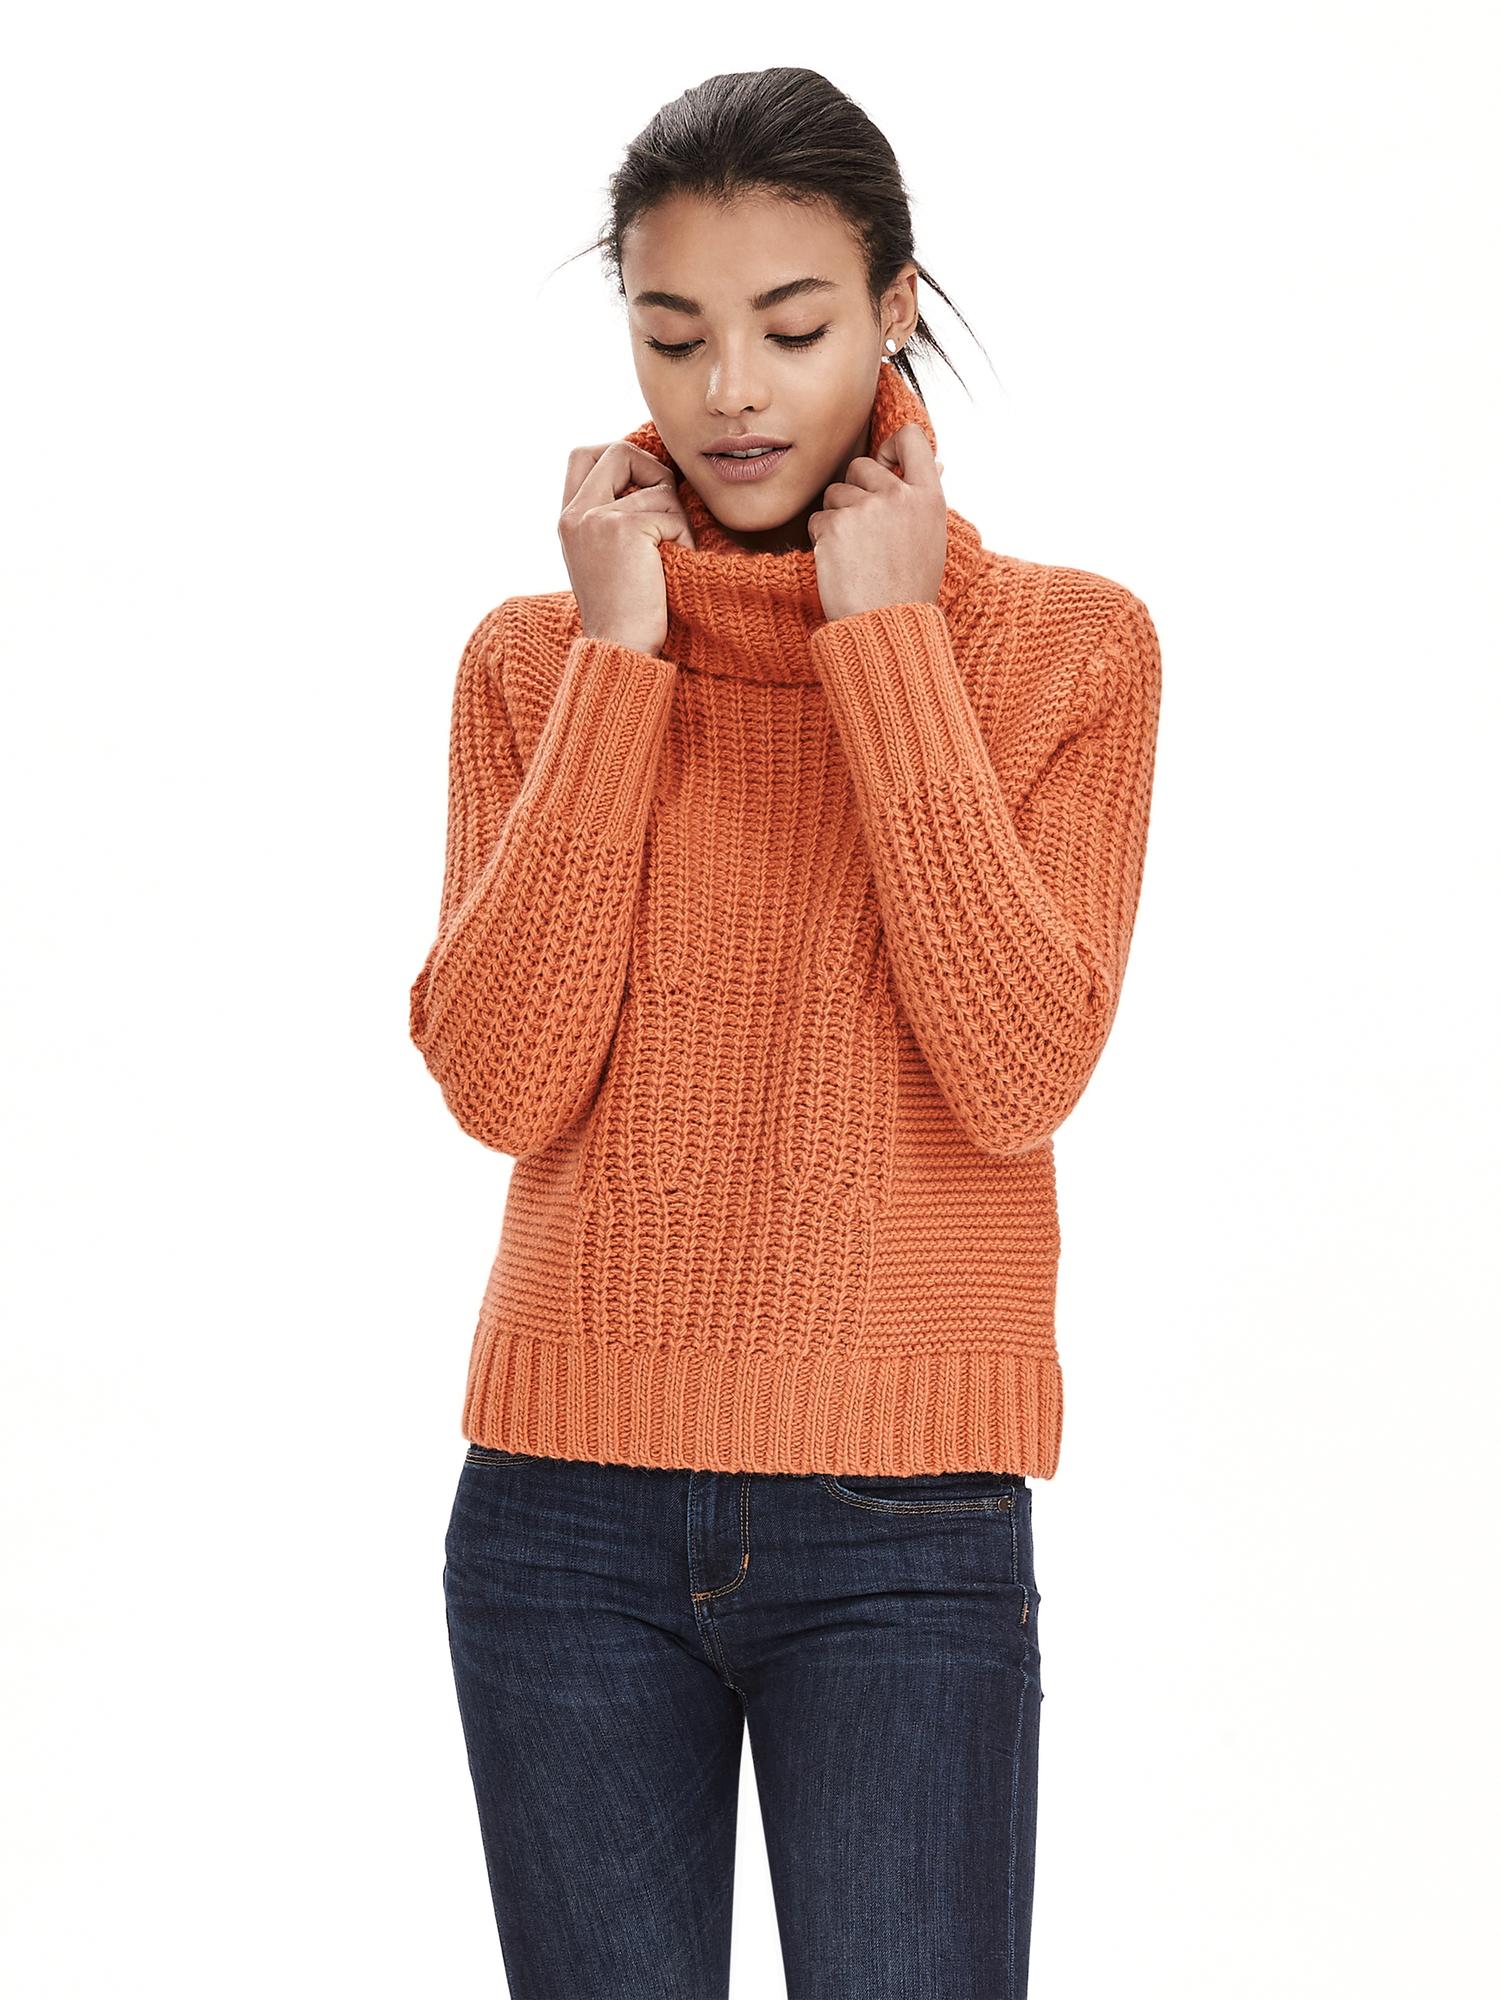 Mixed-Stitch Turtleneck Sweater